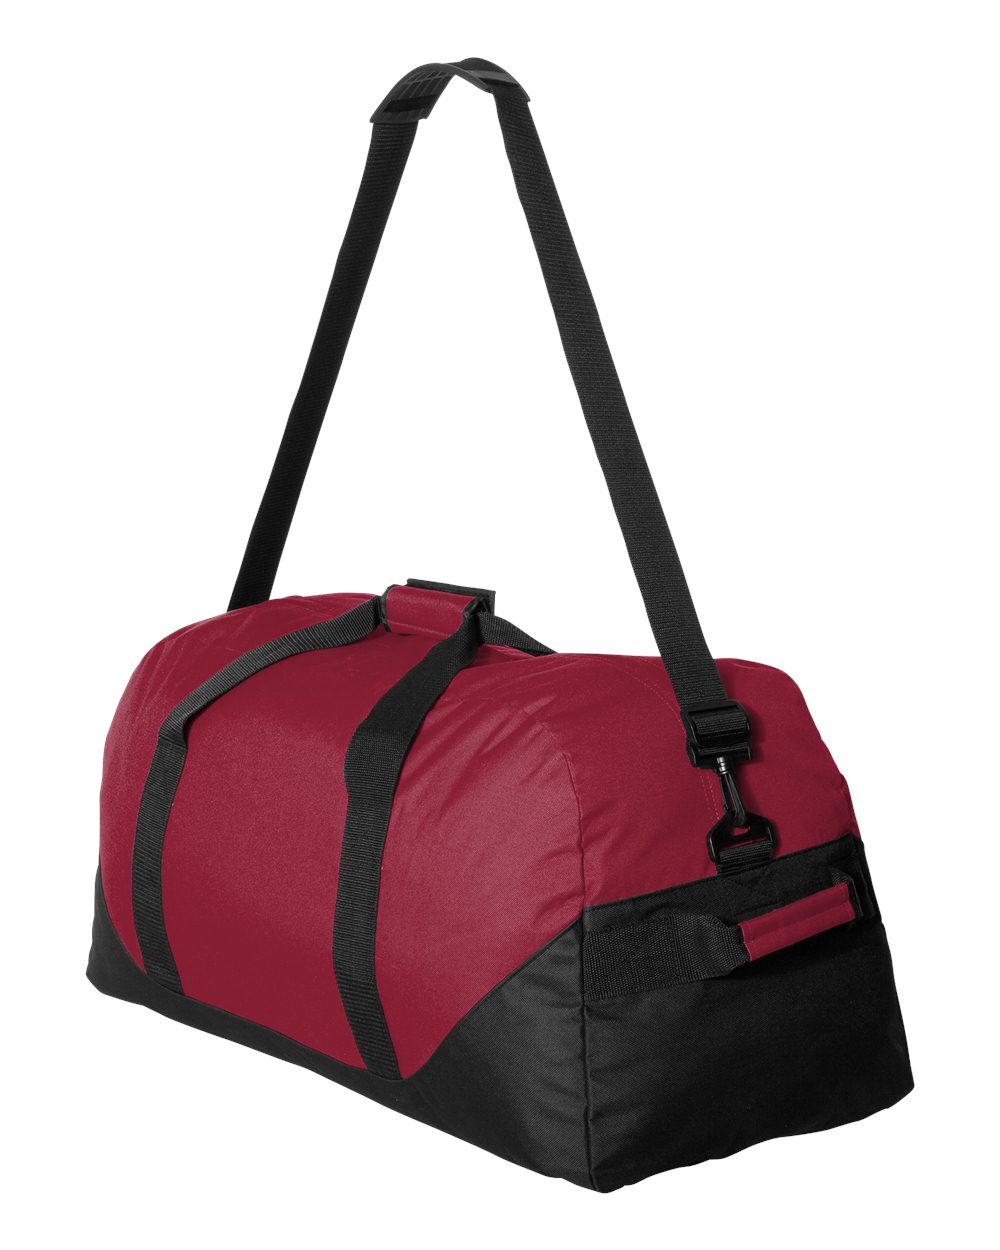 Liberty Bags Liberty Series 30 Inch Duffel - 2252 $24.14 - Bags